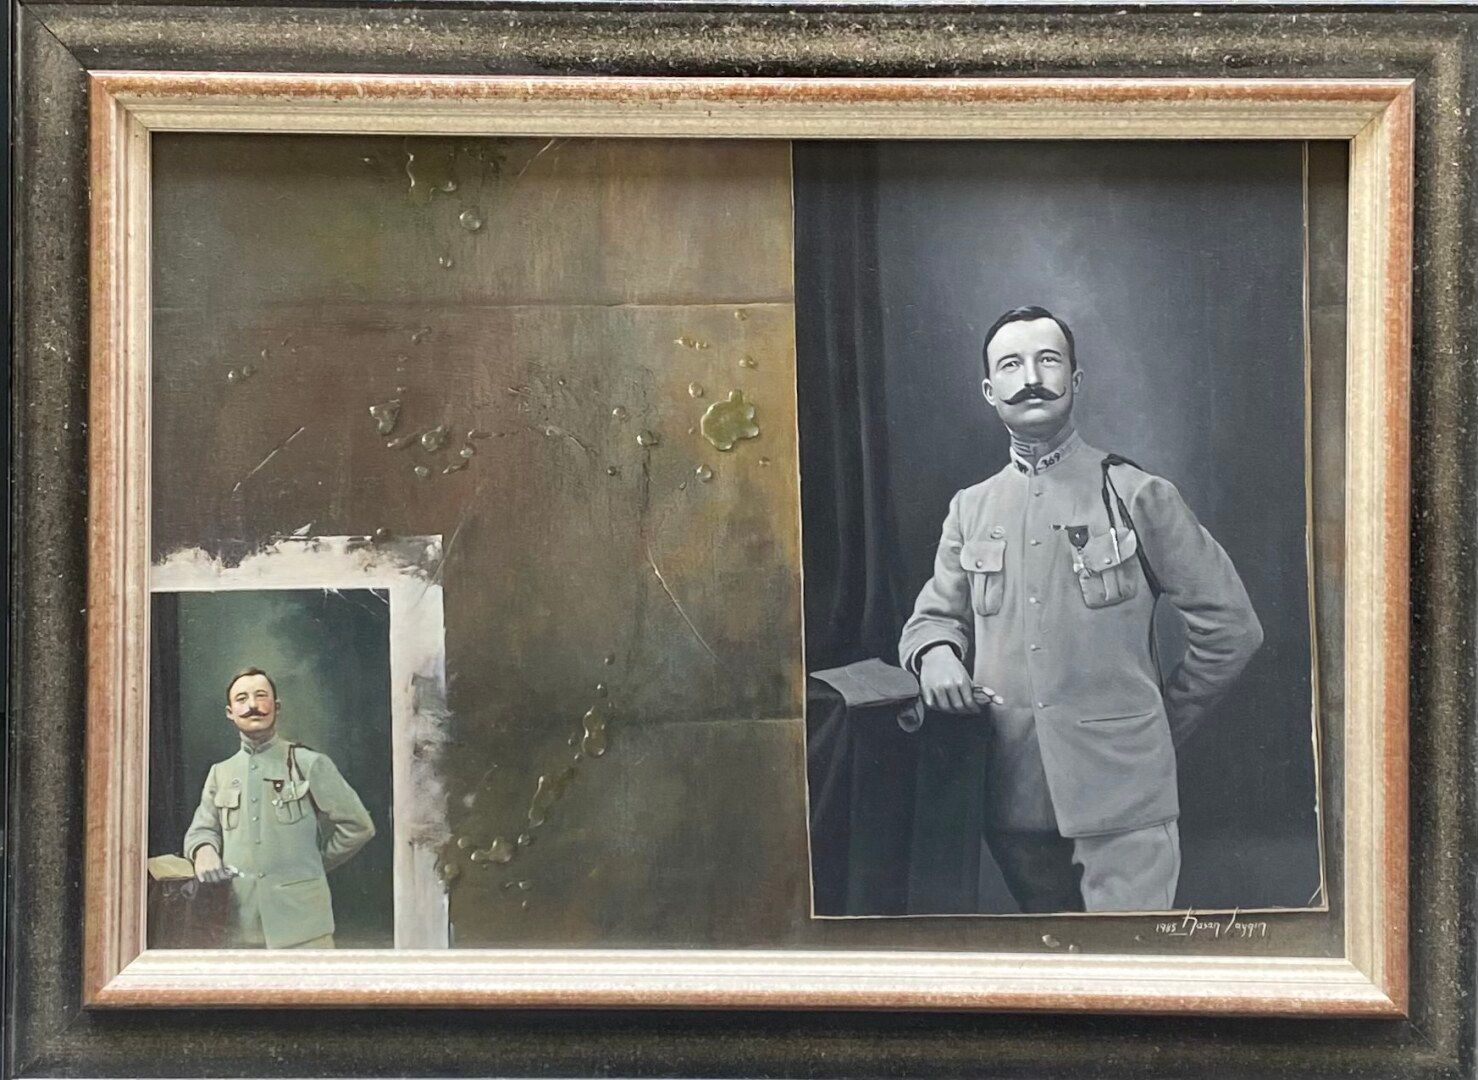 Null 哈桑-赛金（1958年）

伟大的父亲--1914年

布面油画

右下方有签名和日期1985

背面有标题

39 x 56 厘米